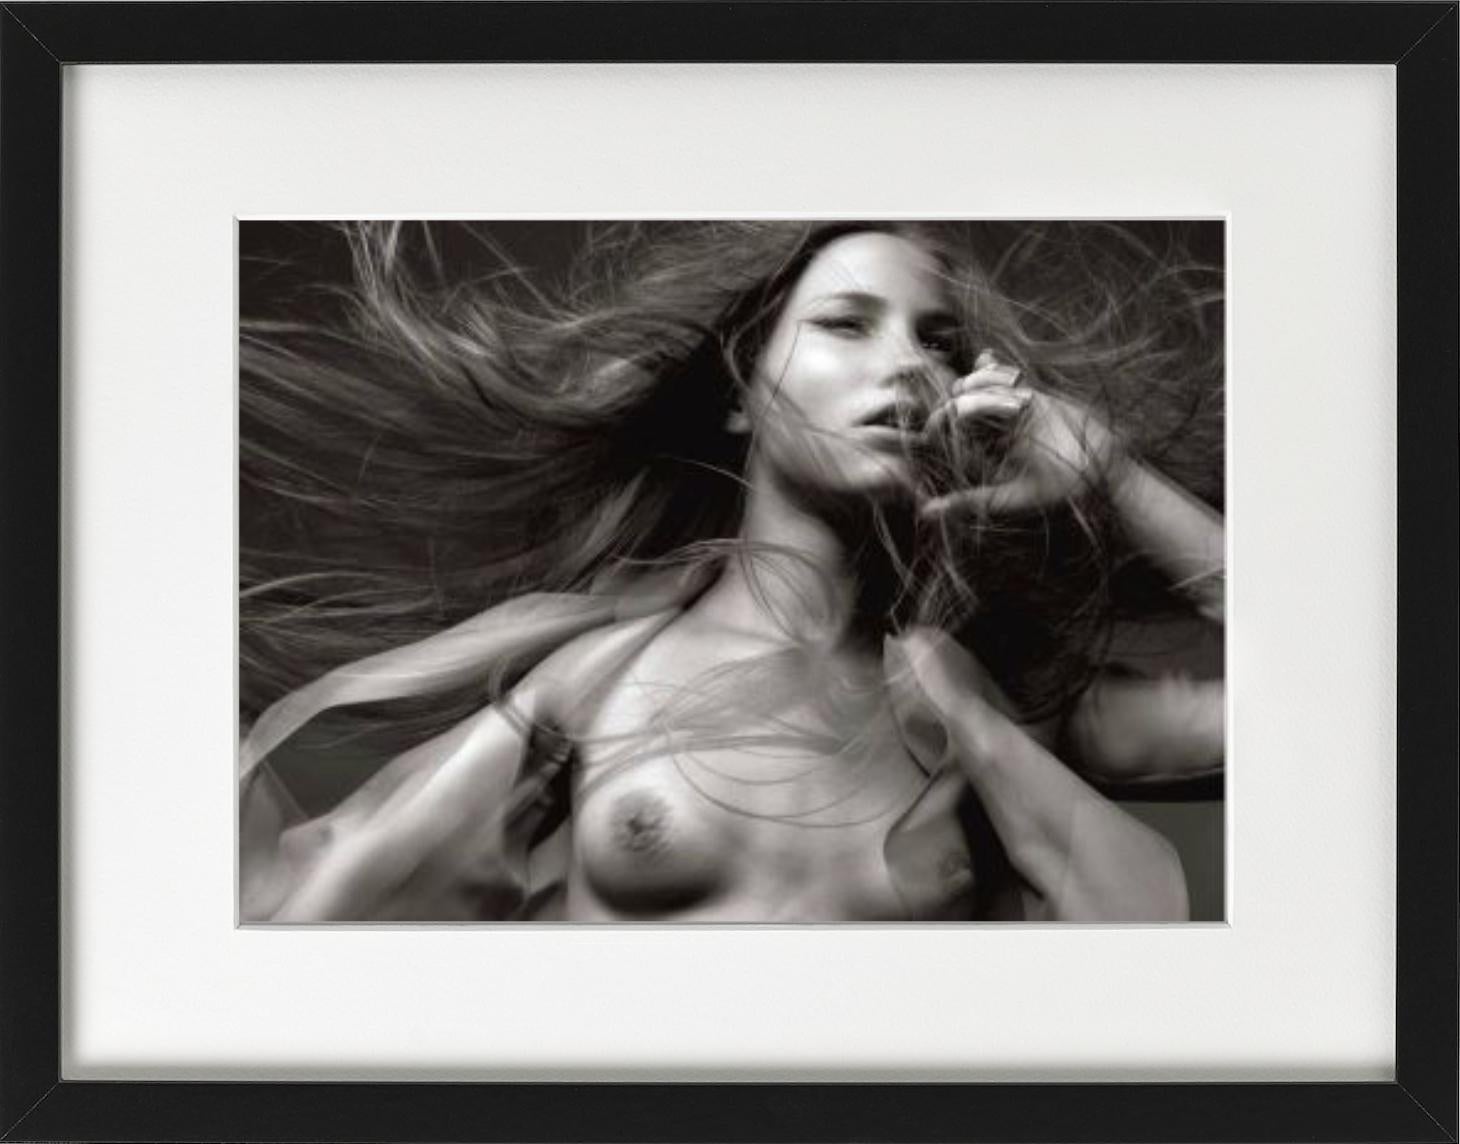 American Nude - double exposure portrait, fine art photography, 2000 - Contemporary Photograph by Michel Comte